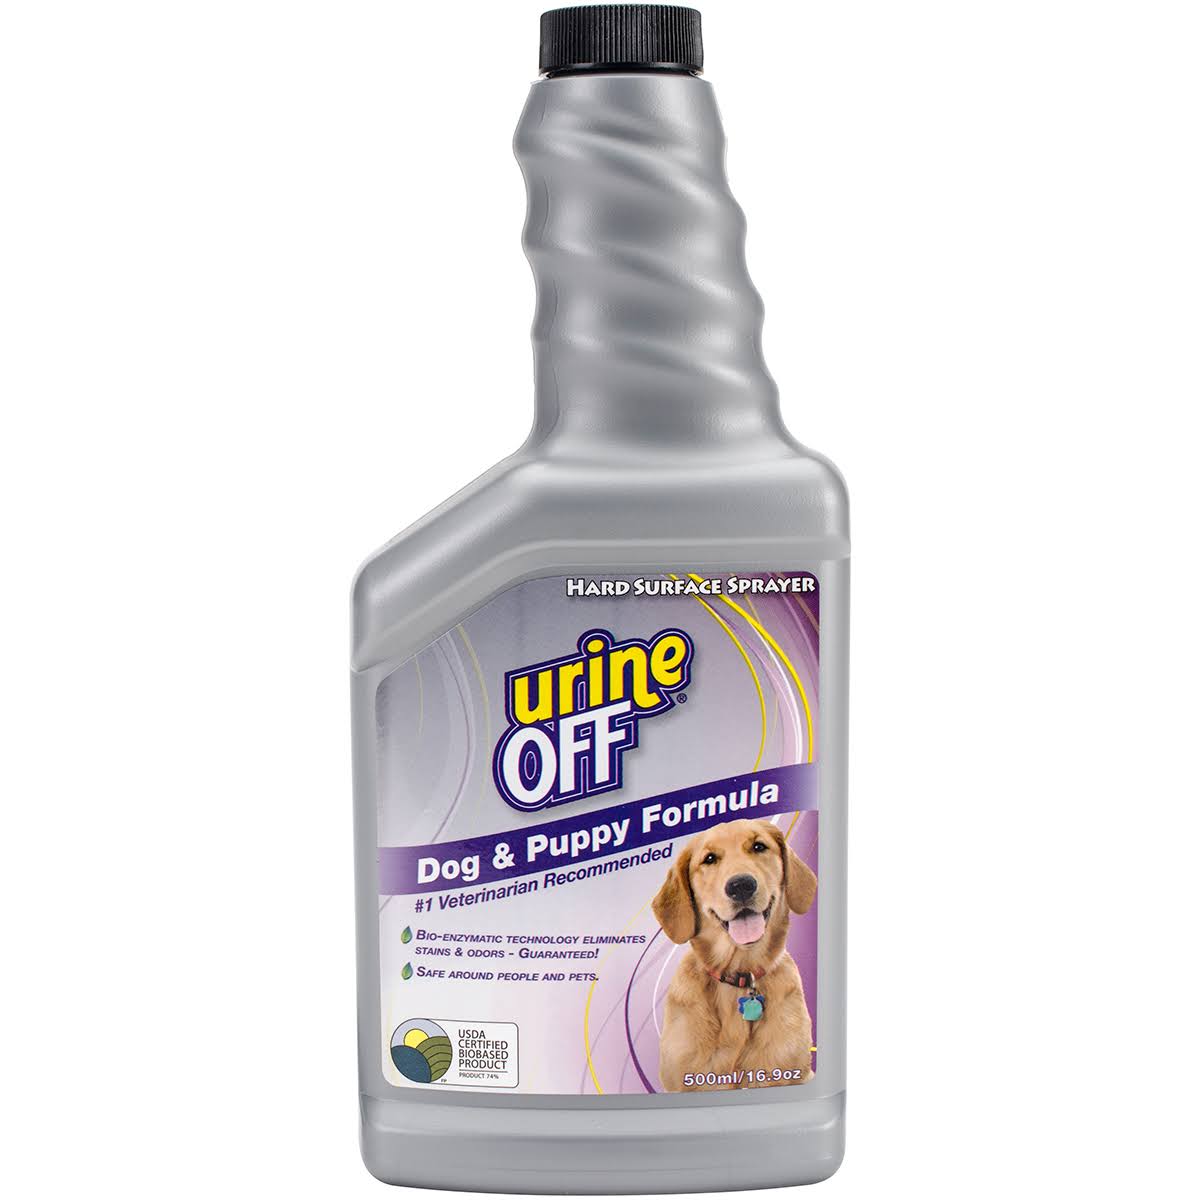 Urine off Dog and Puppy Formula - 500ml